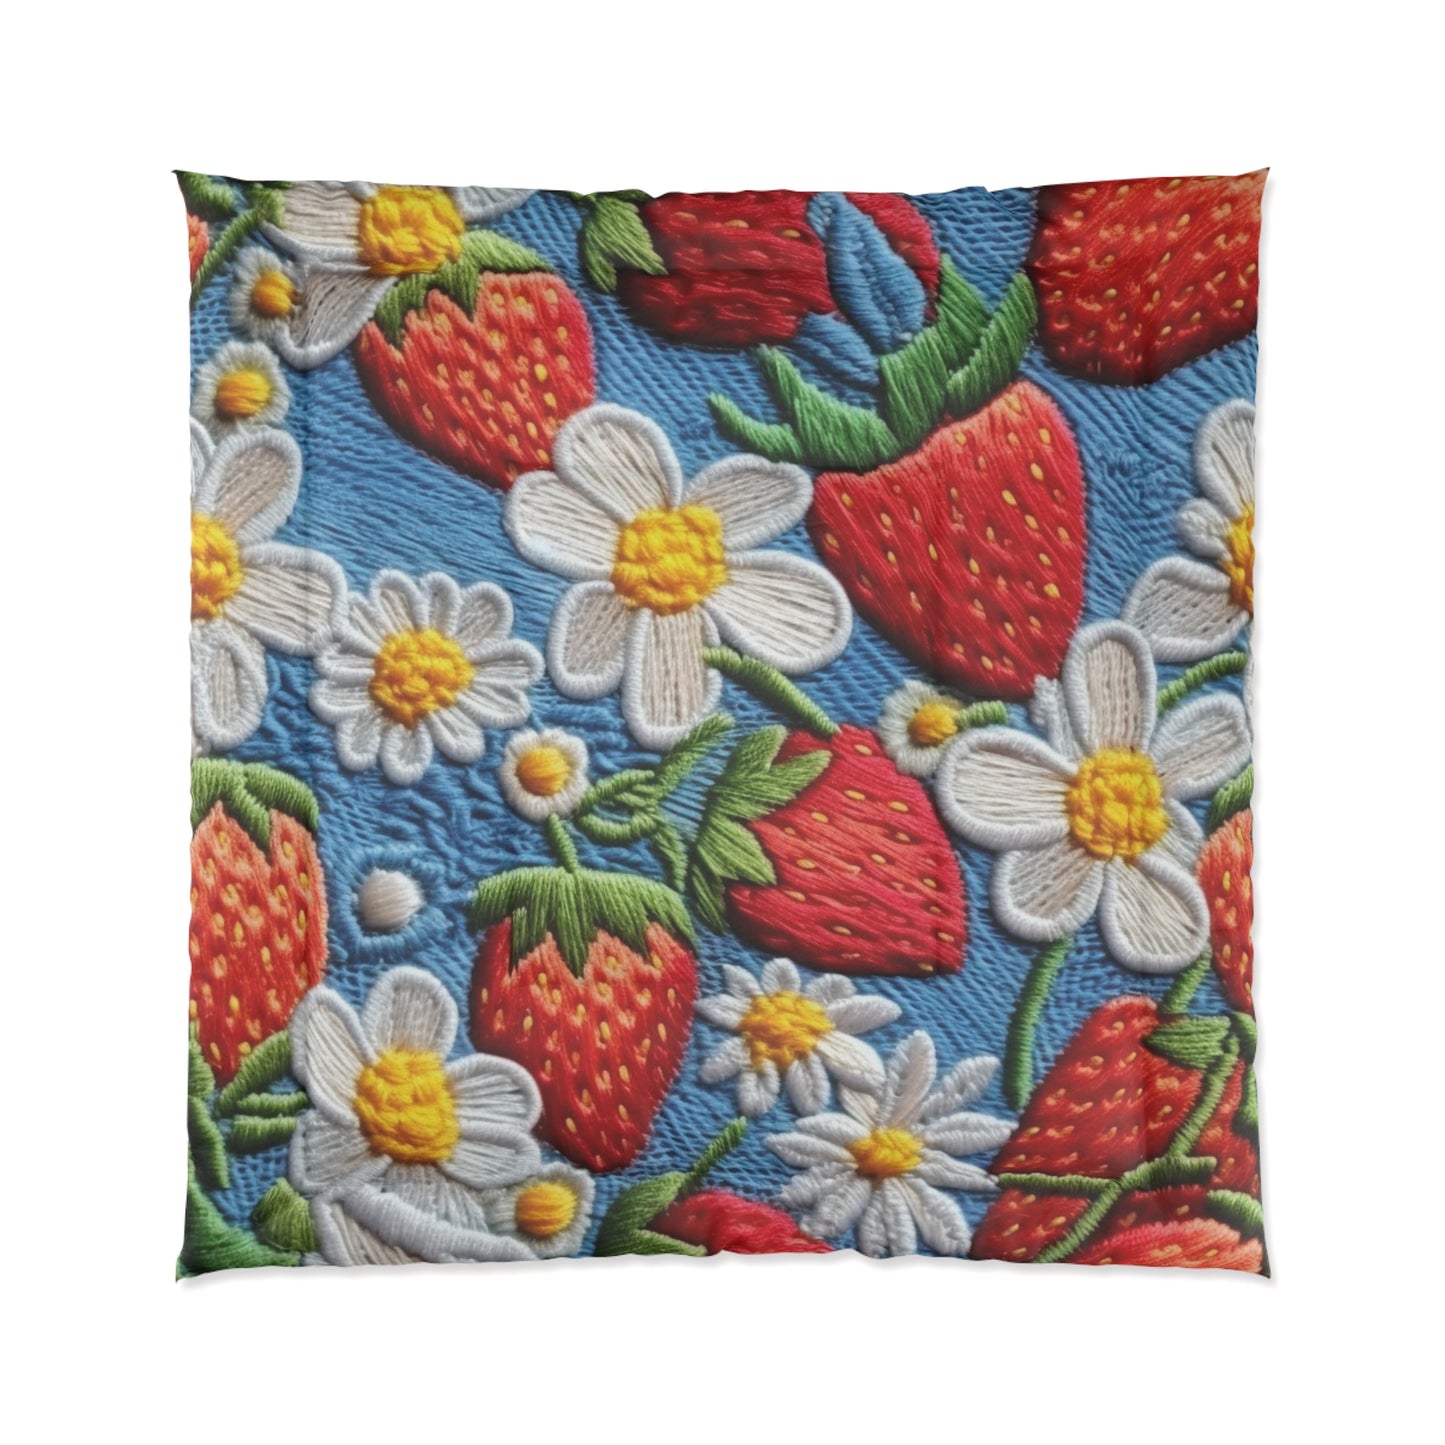 Orchard Berries: Juicy Sweetness from Nature's Garden - Fresh Strawberry Elegance - Bed Comforter